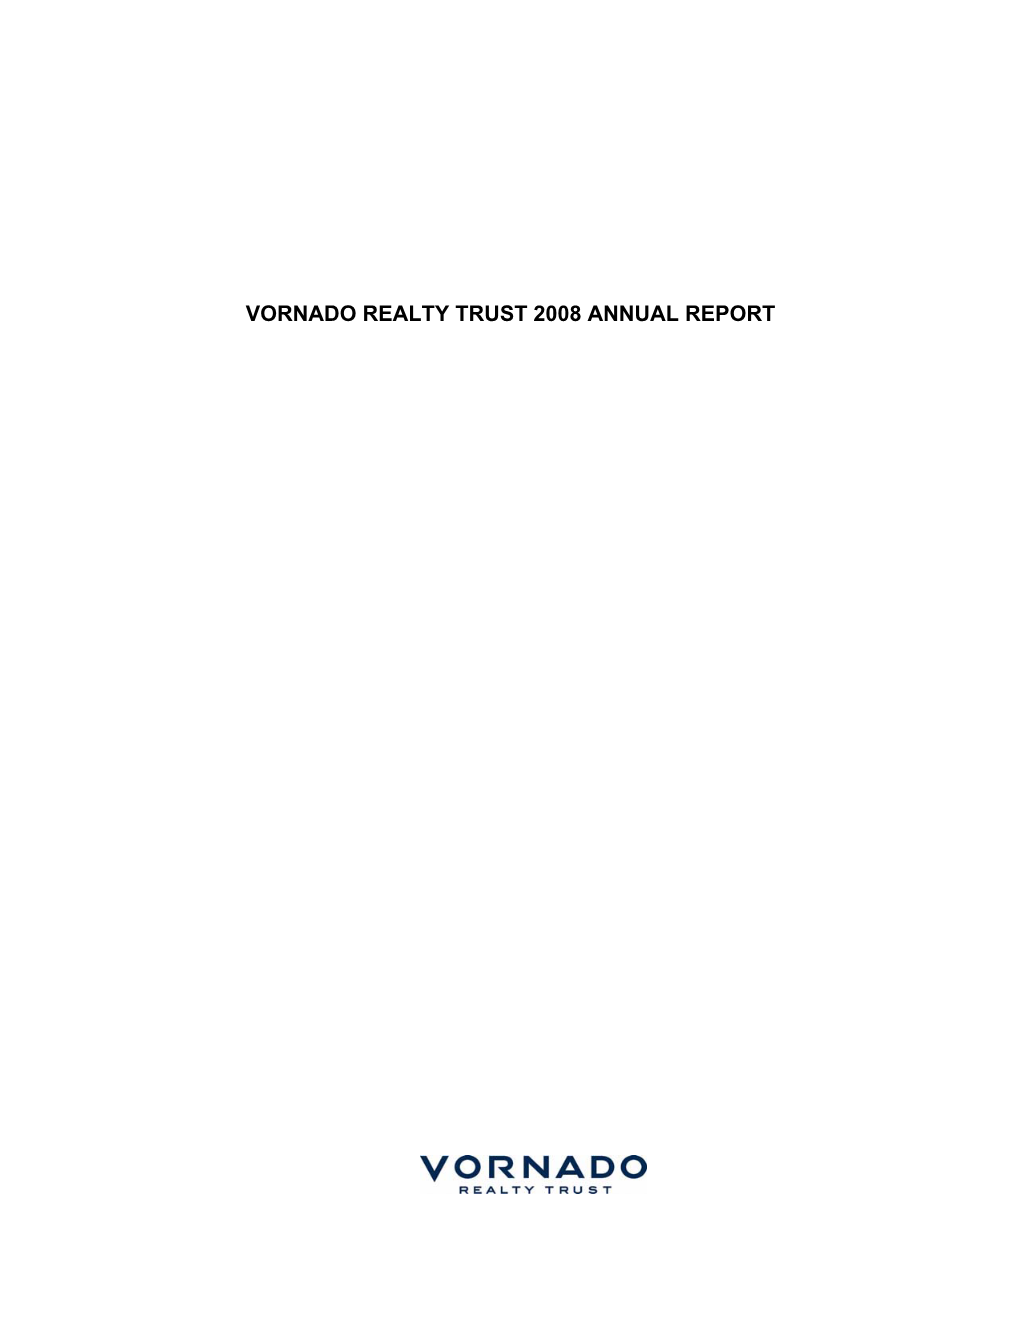 Vornado Realty Trust 2008 Annual Report